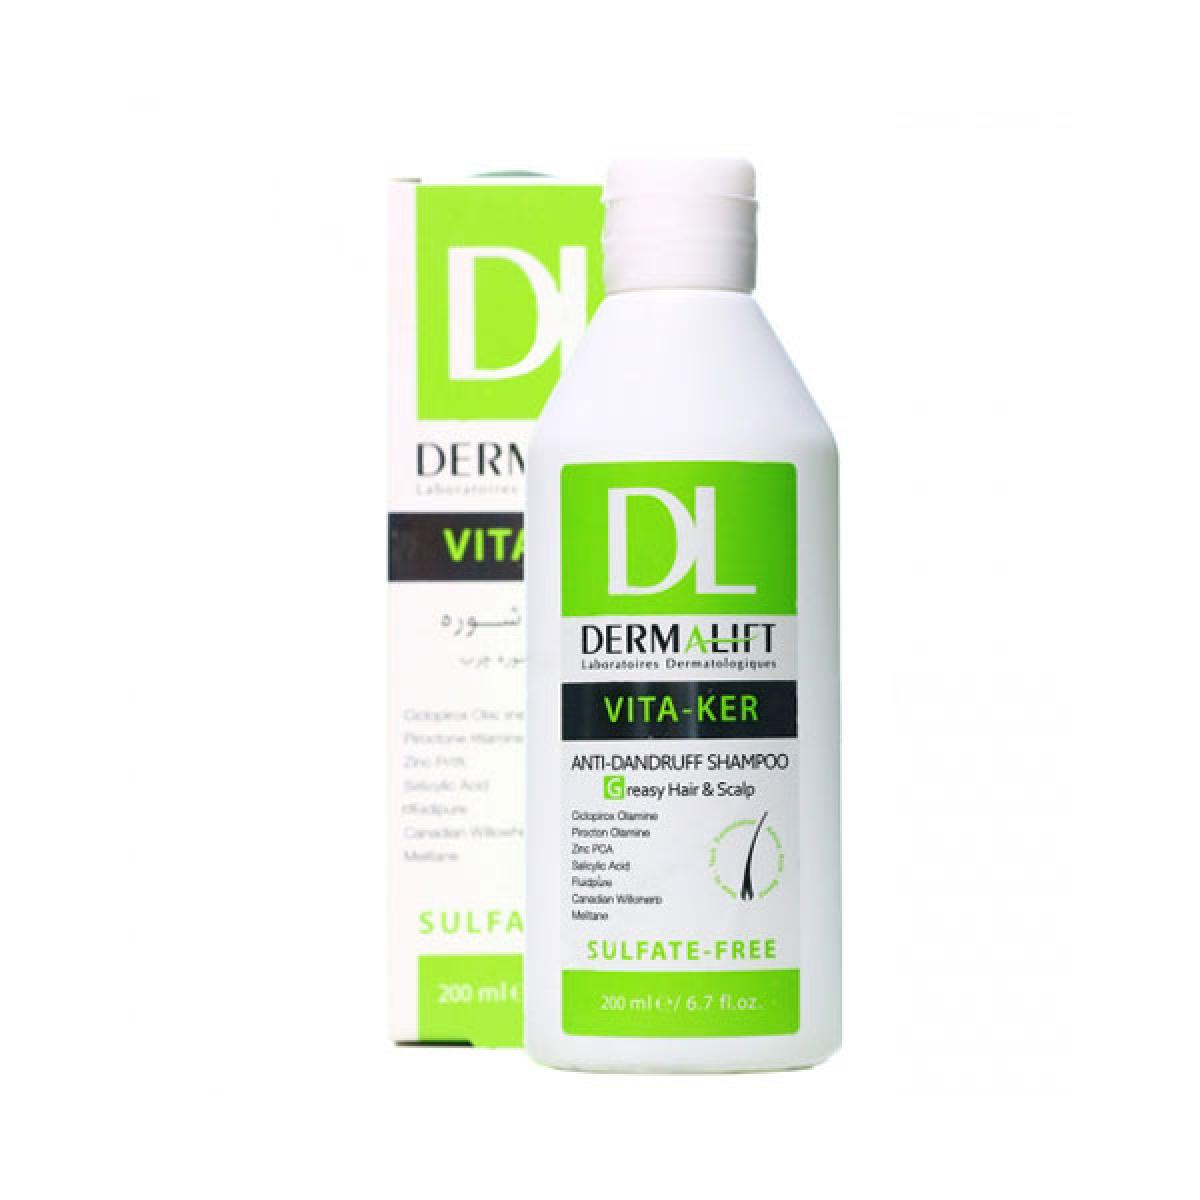 شامپو ضد شوره موی چرب - Dermalift Vita-Ker Anti-Dandruff Shampoo Greasy